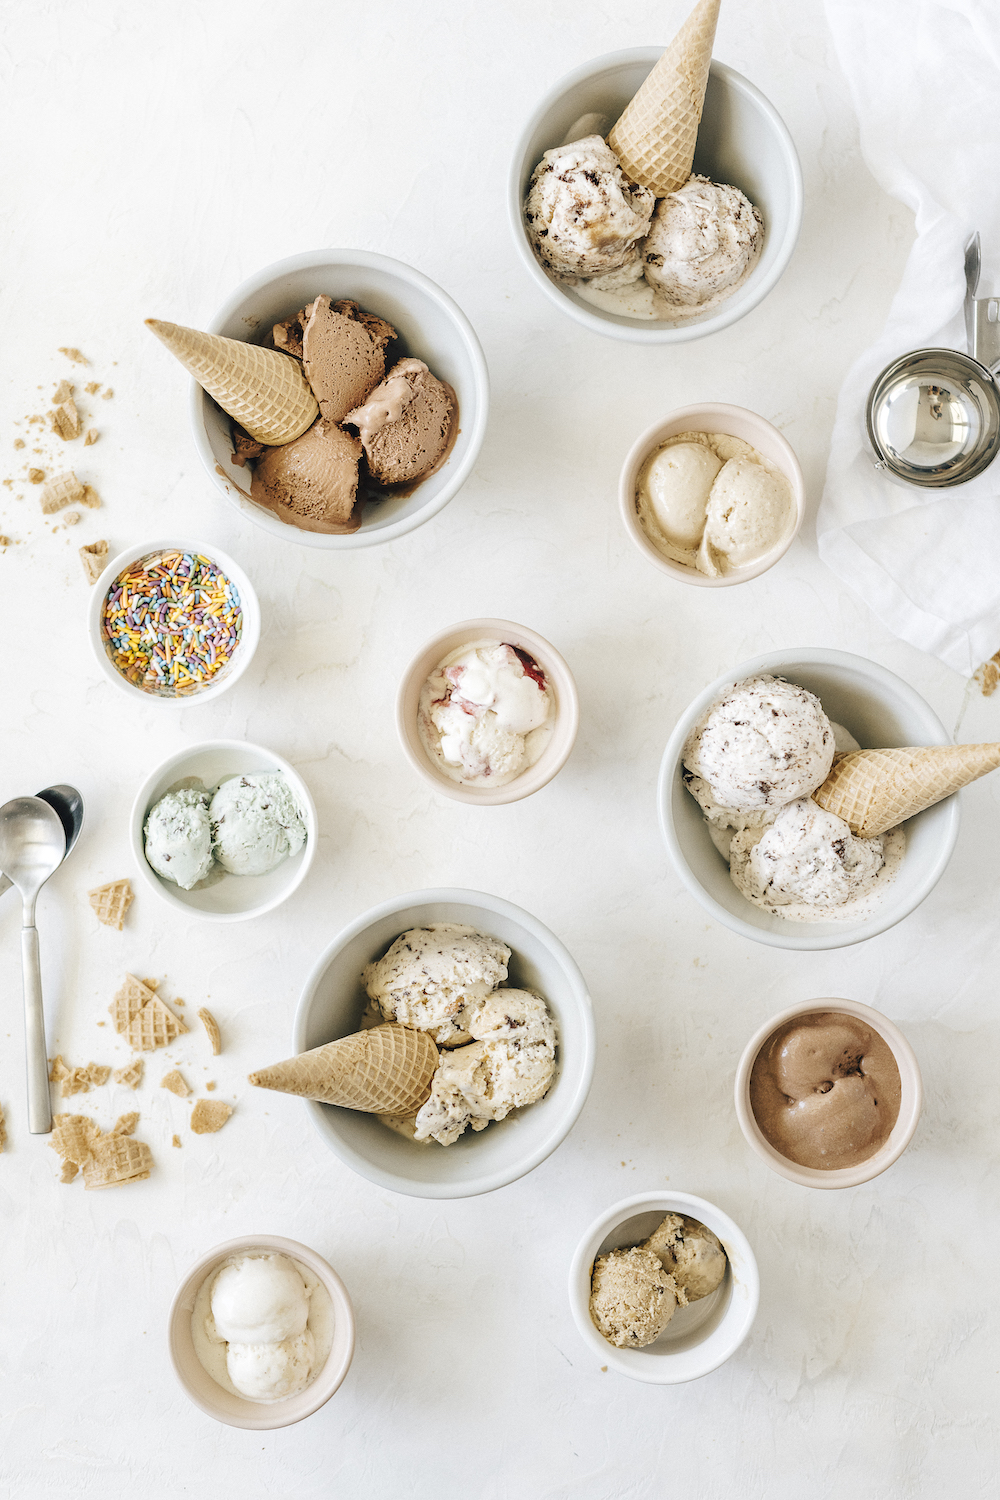 camille-styles-ice-cream-dairy-free-gluten-free-5472